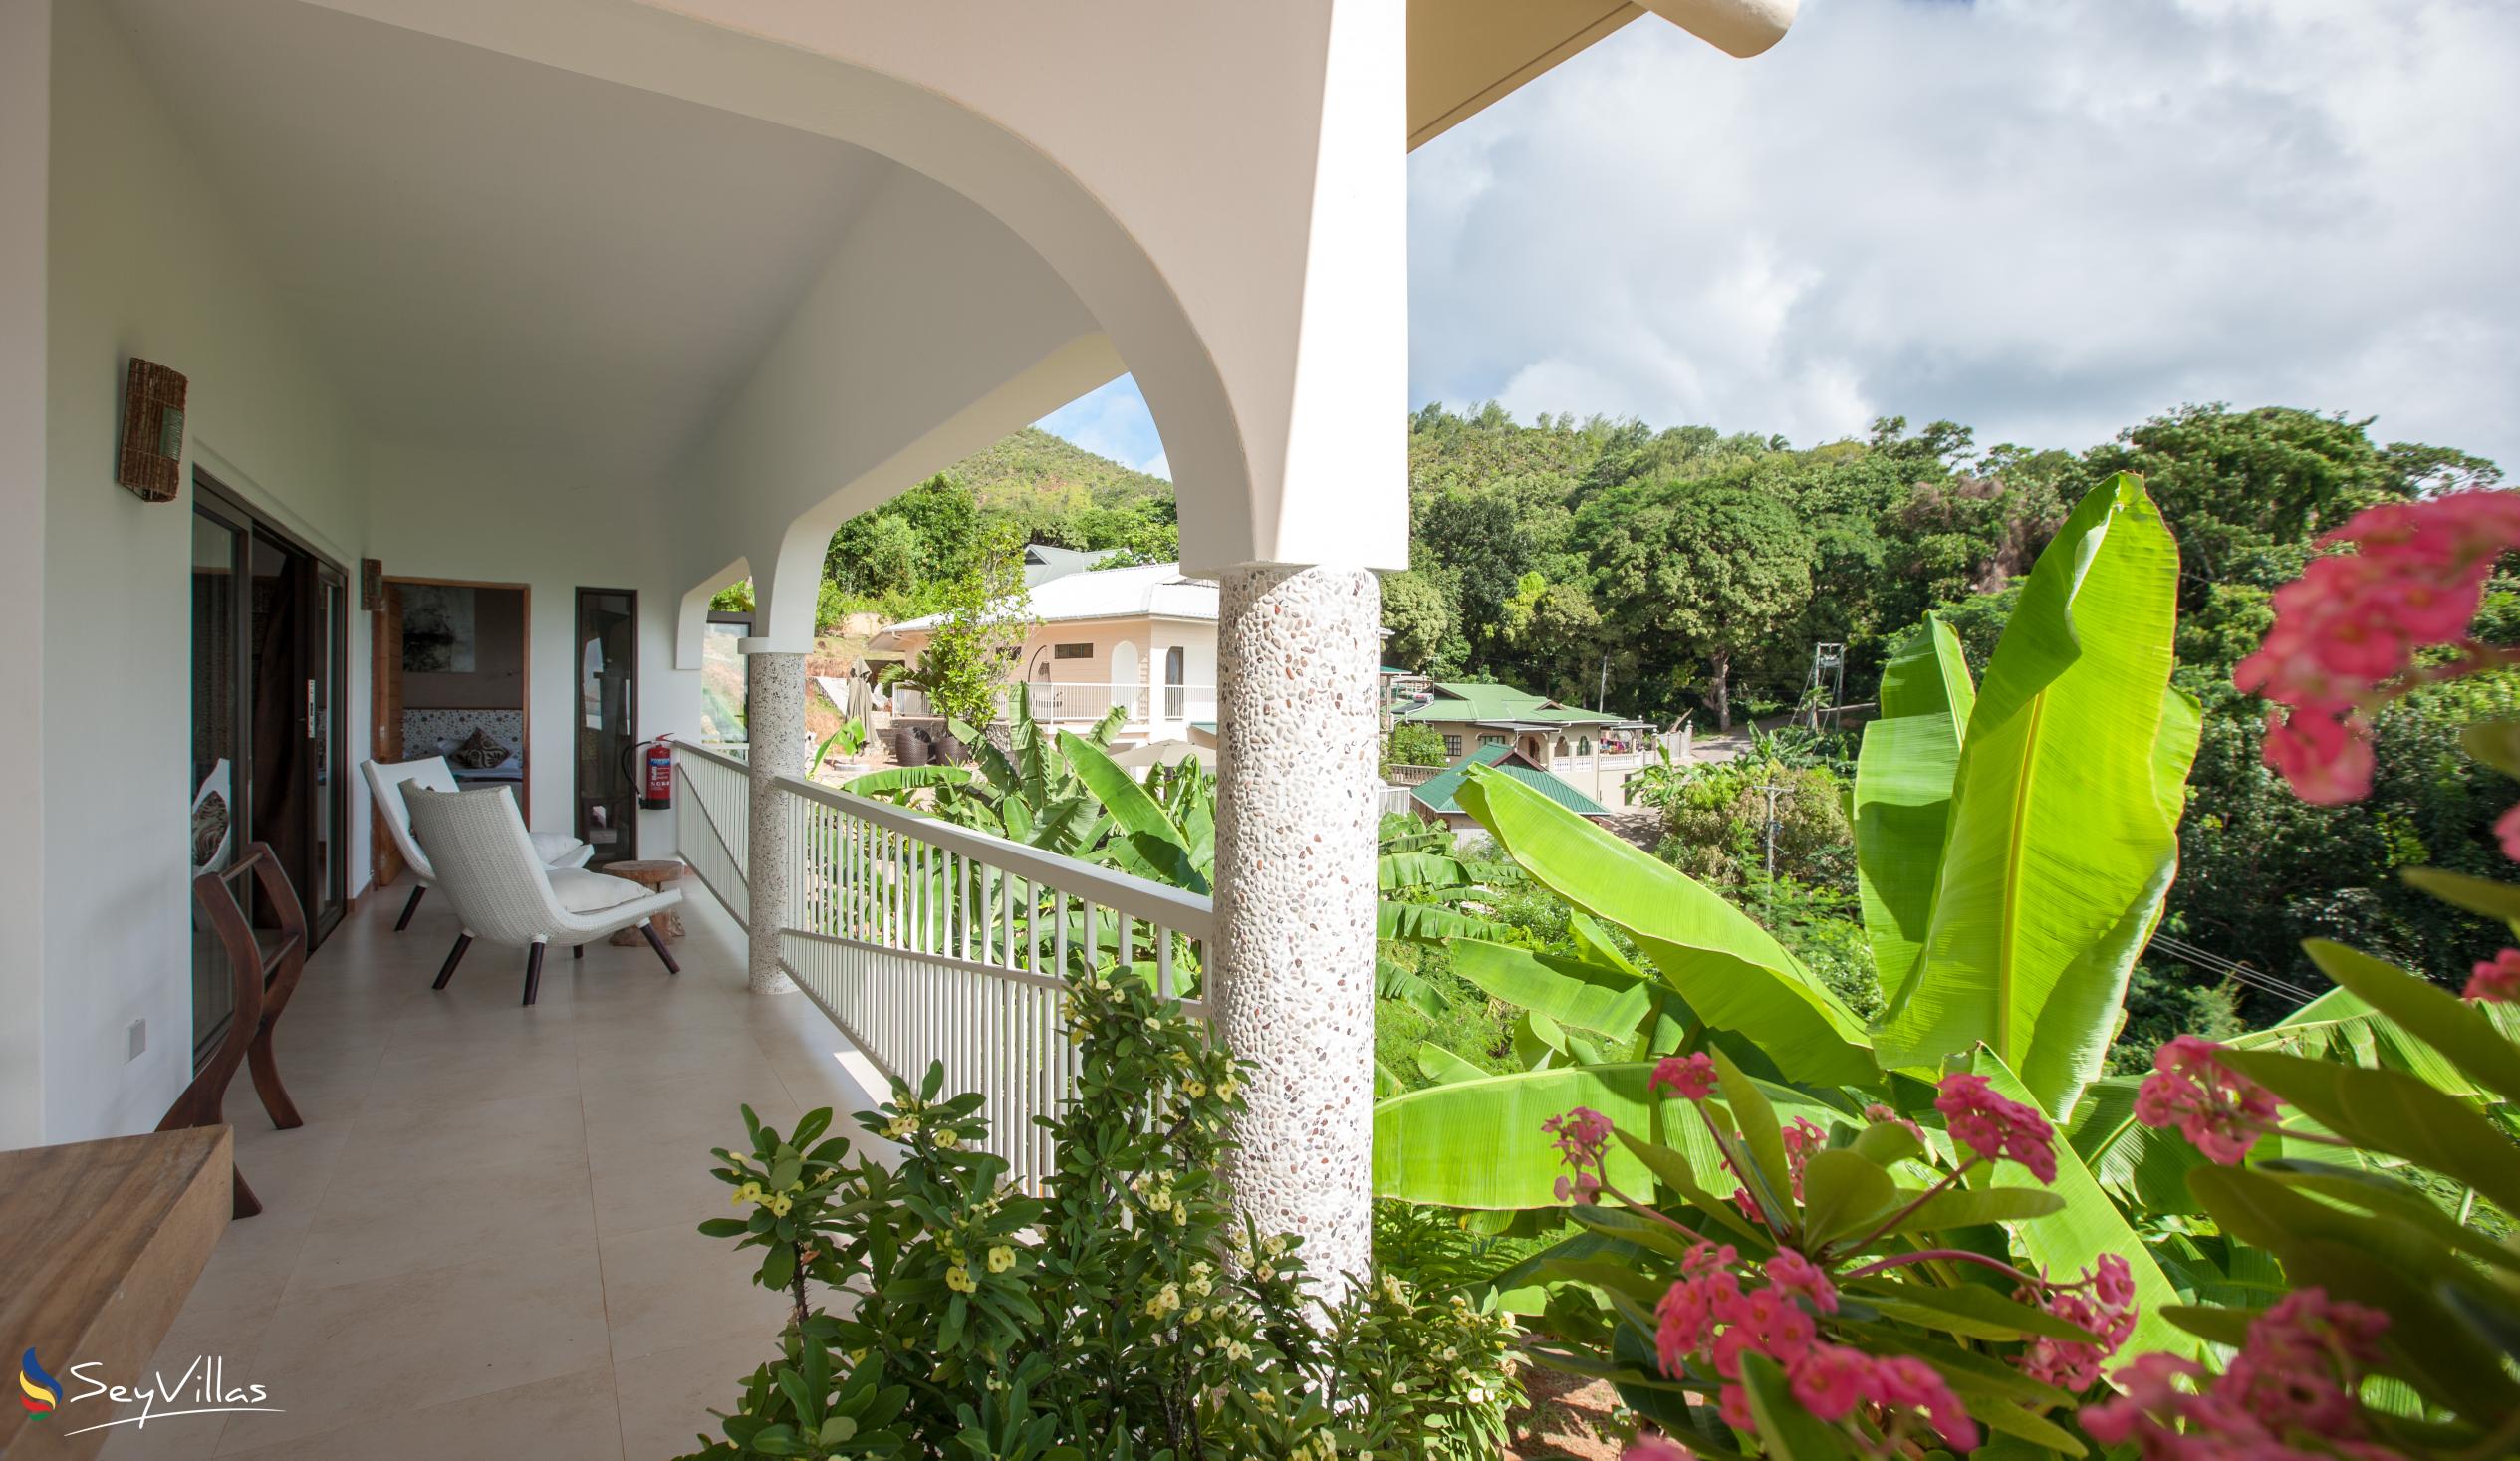 Foto 58: Le Duc de Praslin Hillside Villas - Villa 270° - Praslin (Seychellen)